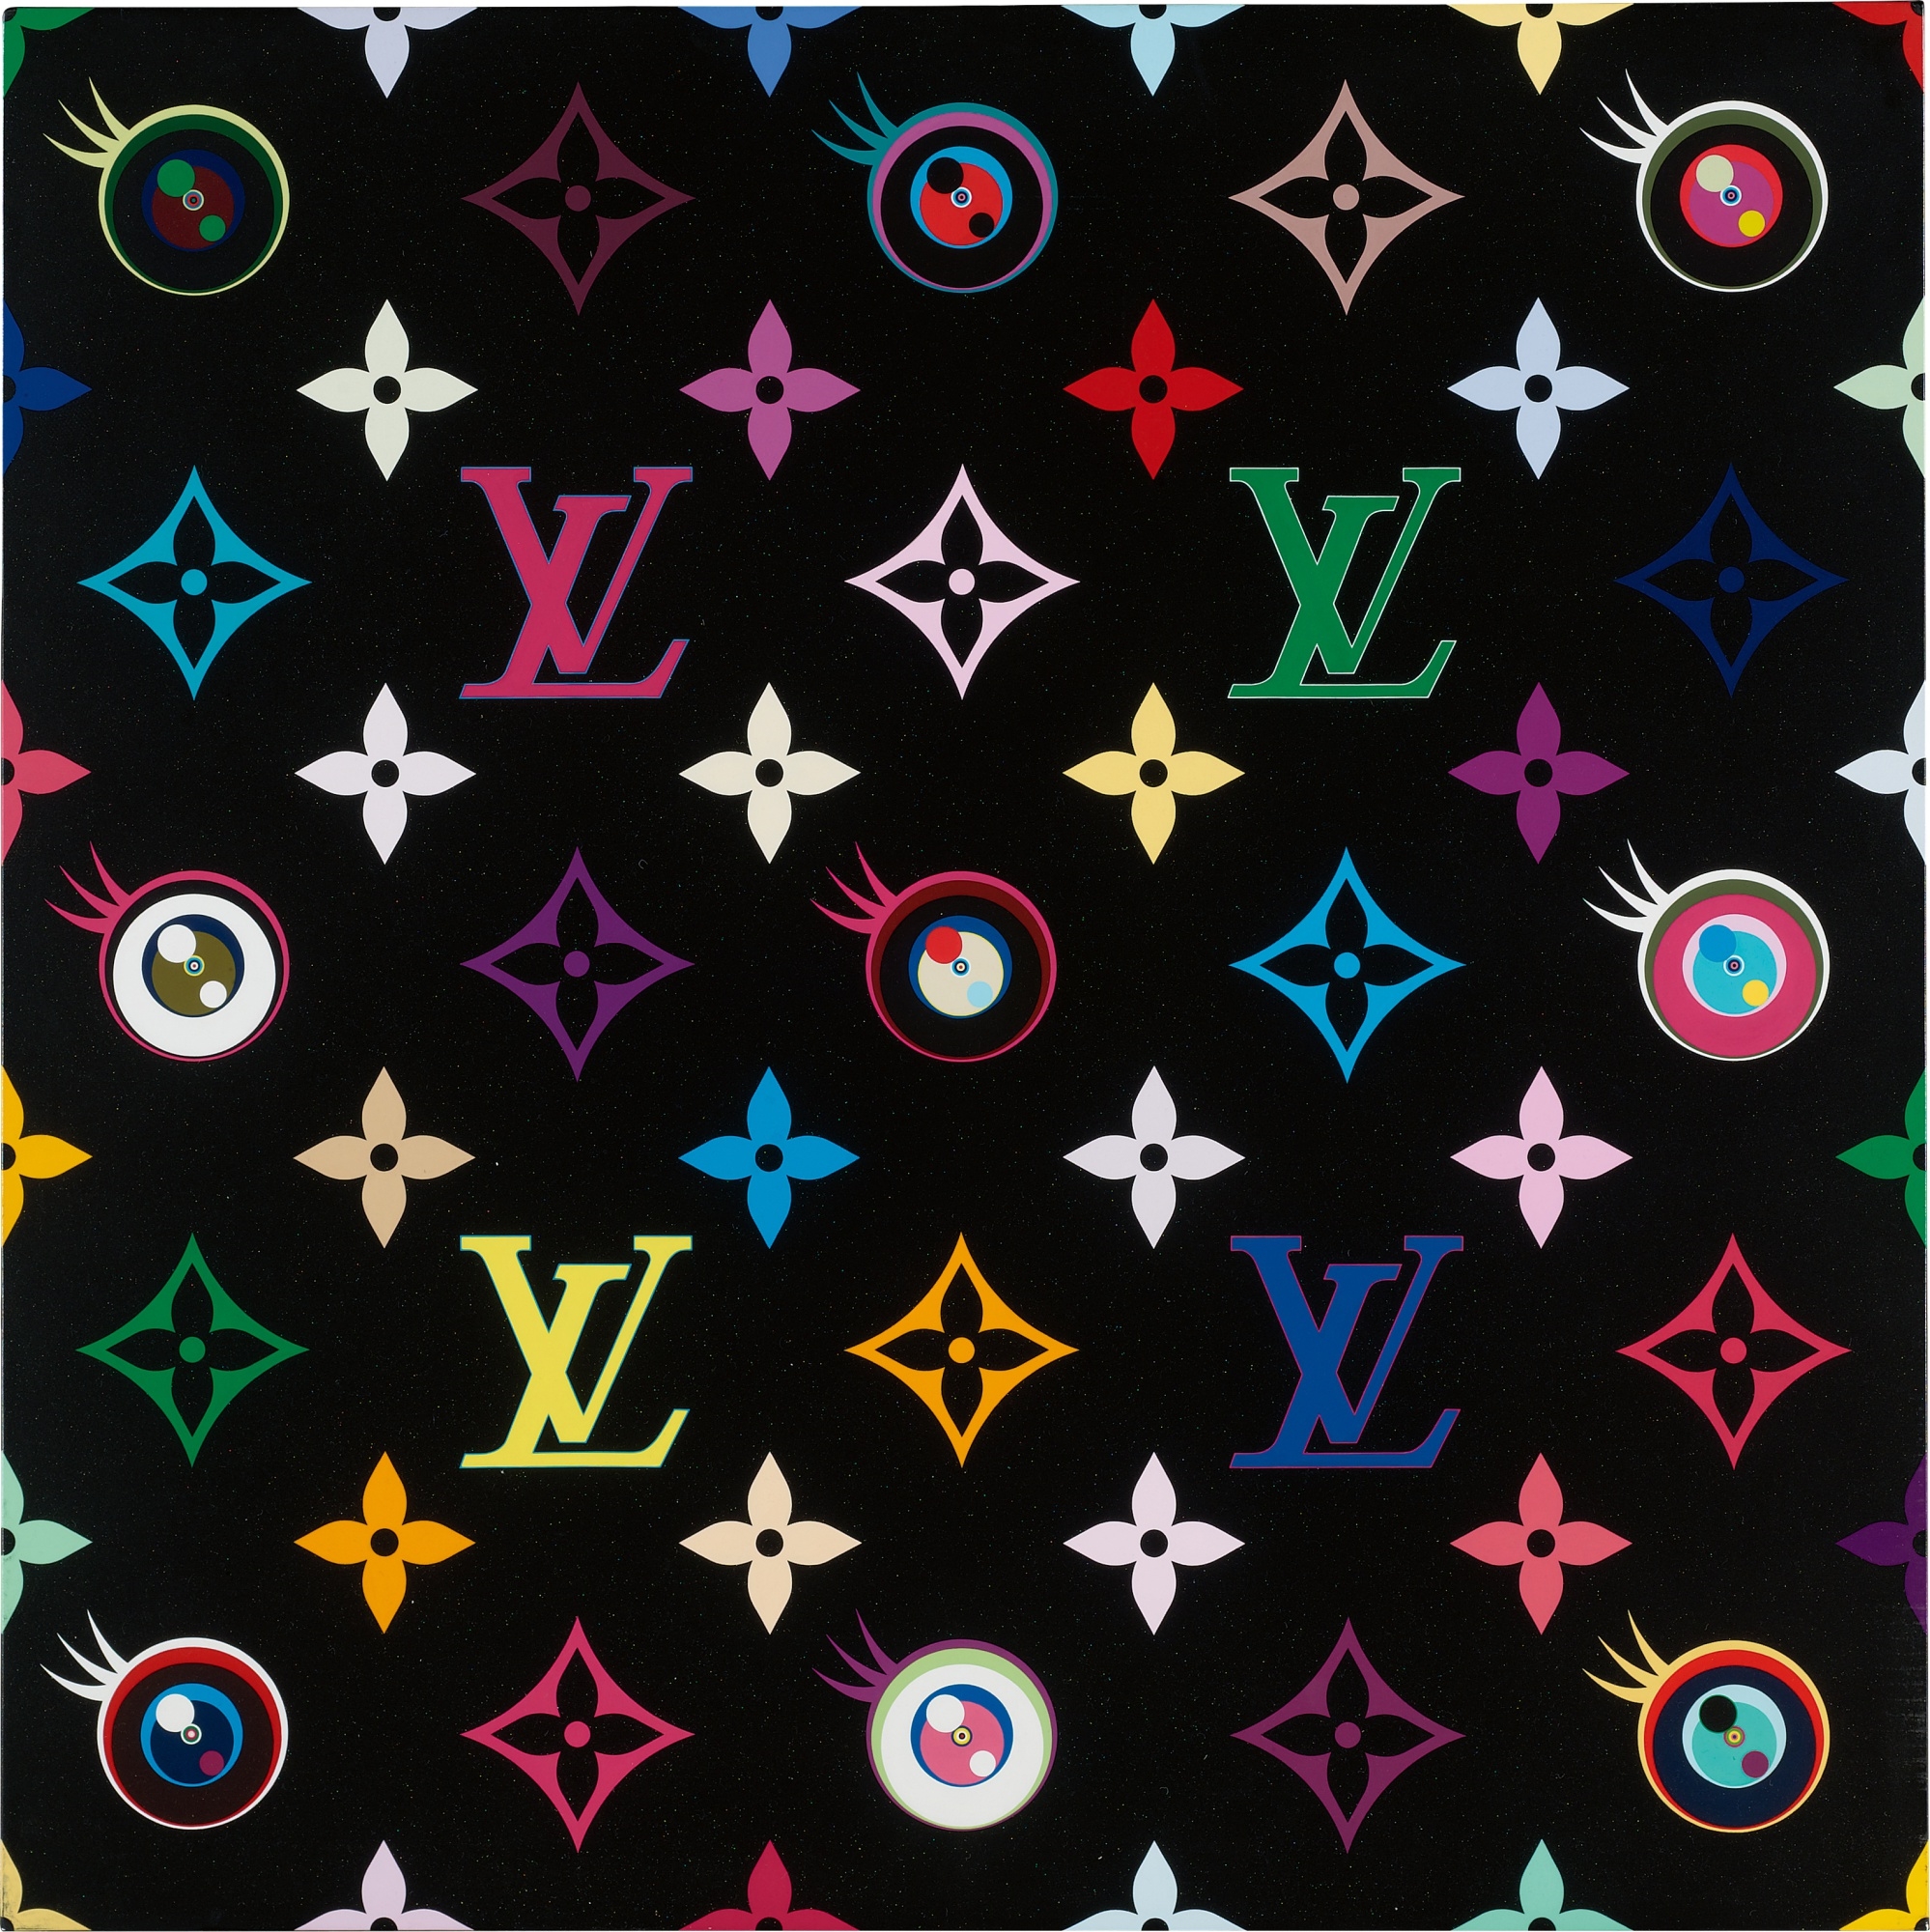 Eye Love SUPERFLAT, Takashi Murakami : Auction Prices & Indices